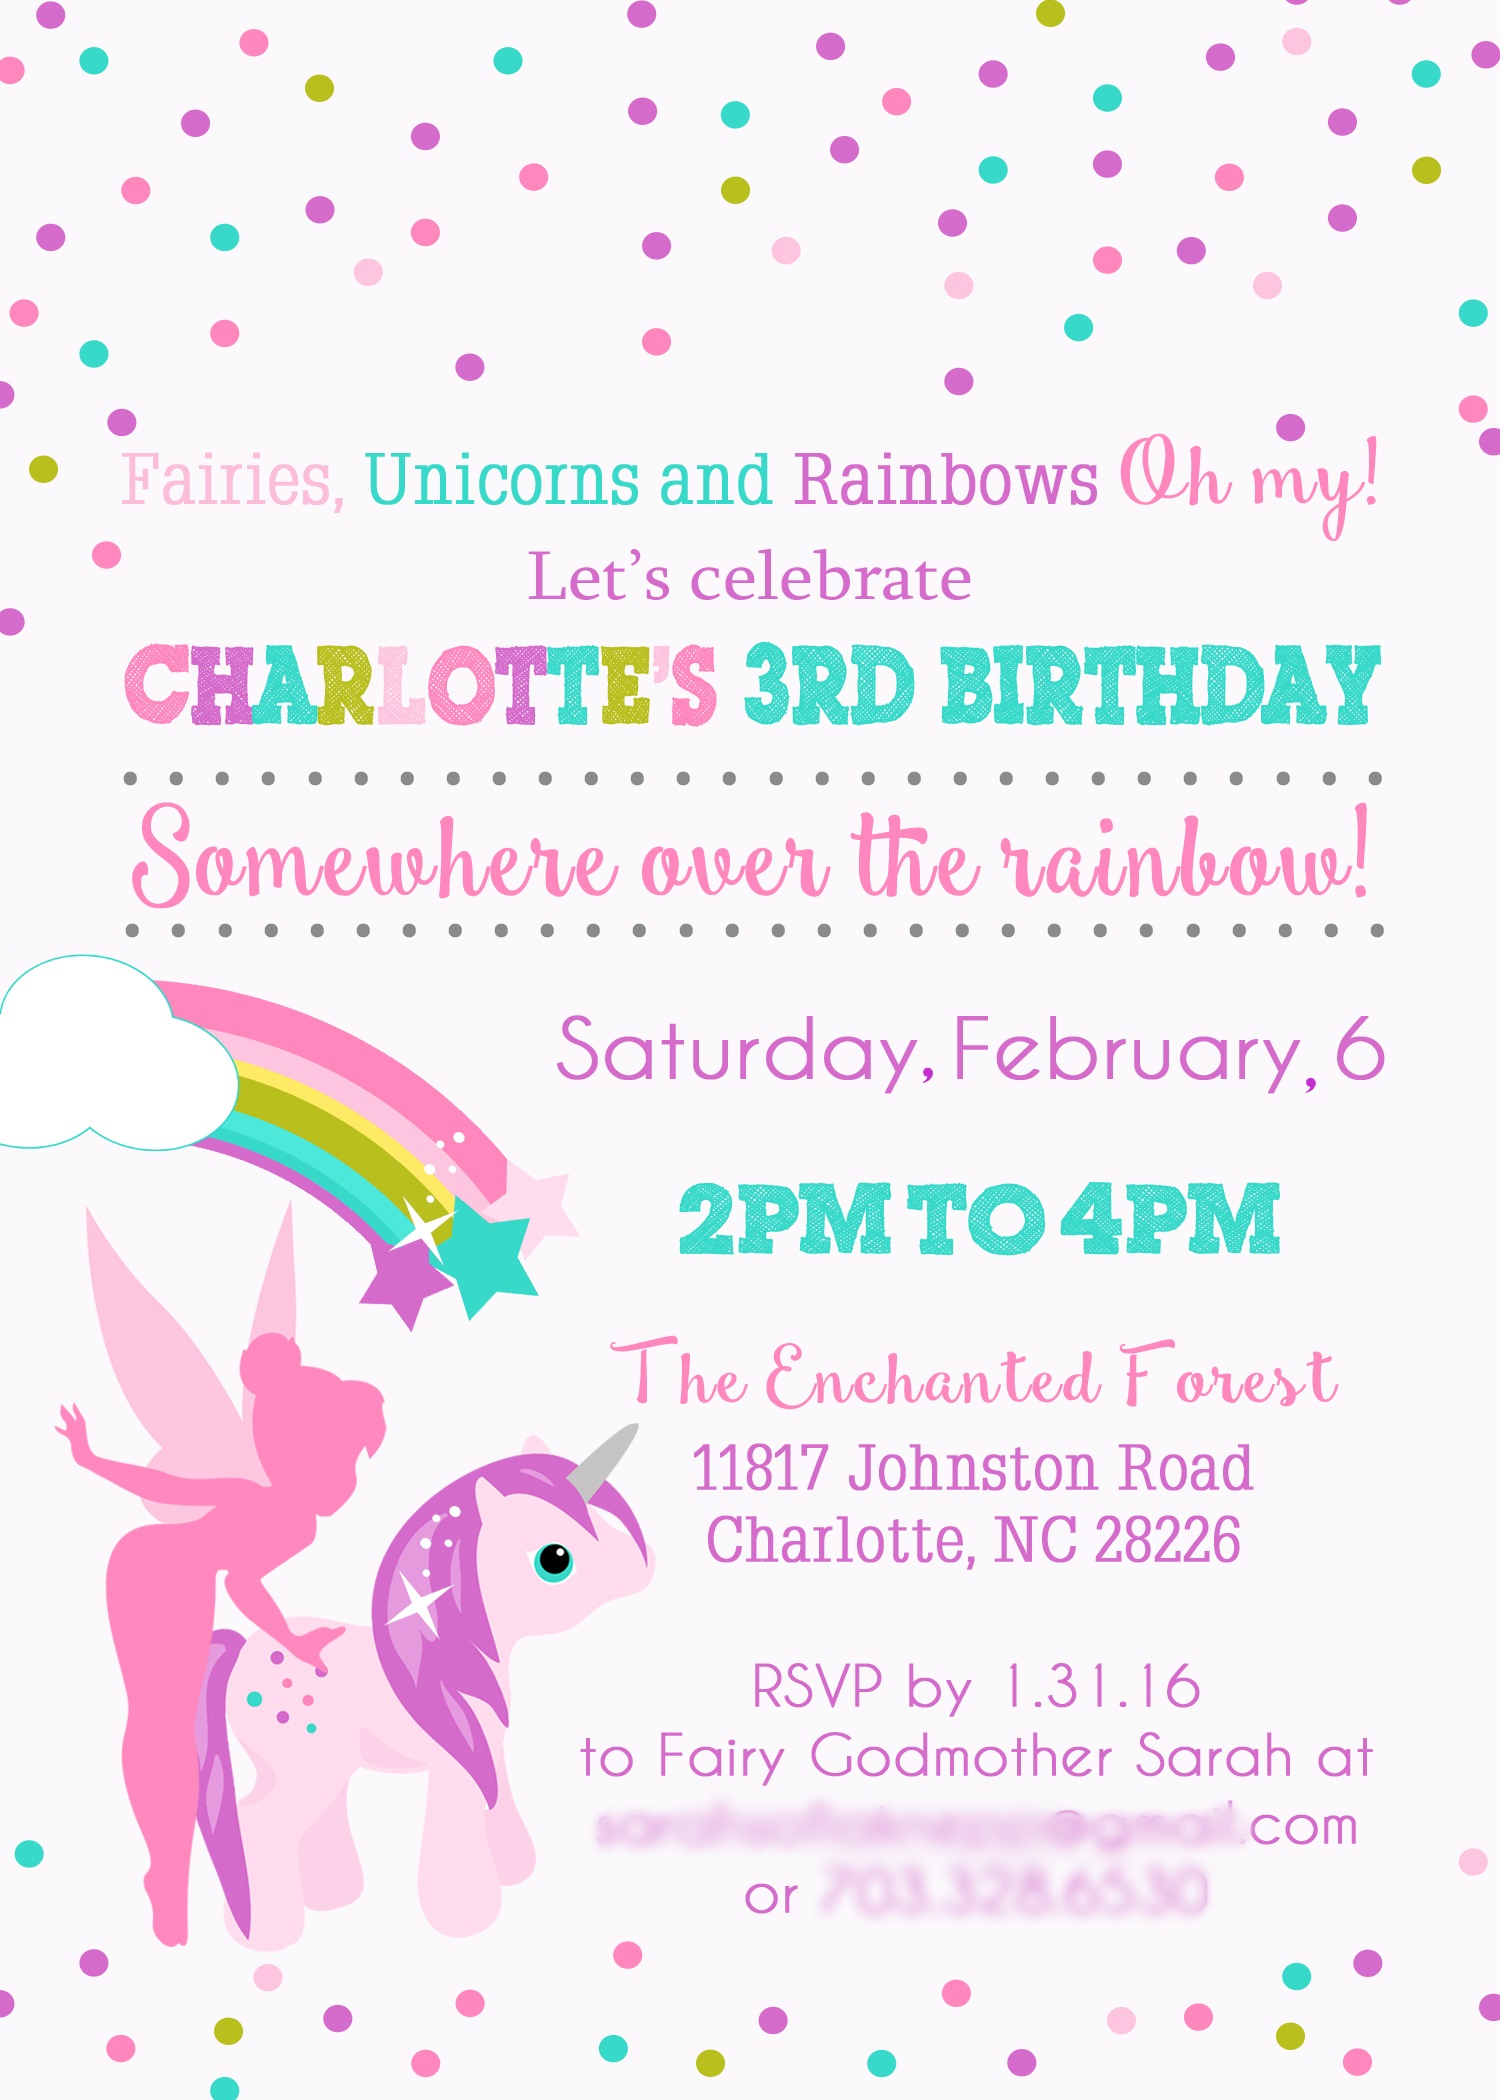 Fairies Unicorns and Rainbows Party Inspiration: Invitation Sarah Sofia Productions